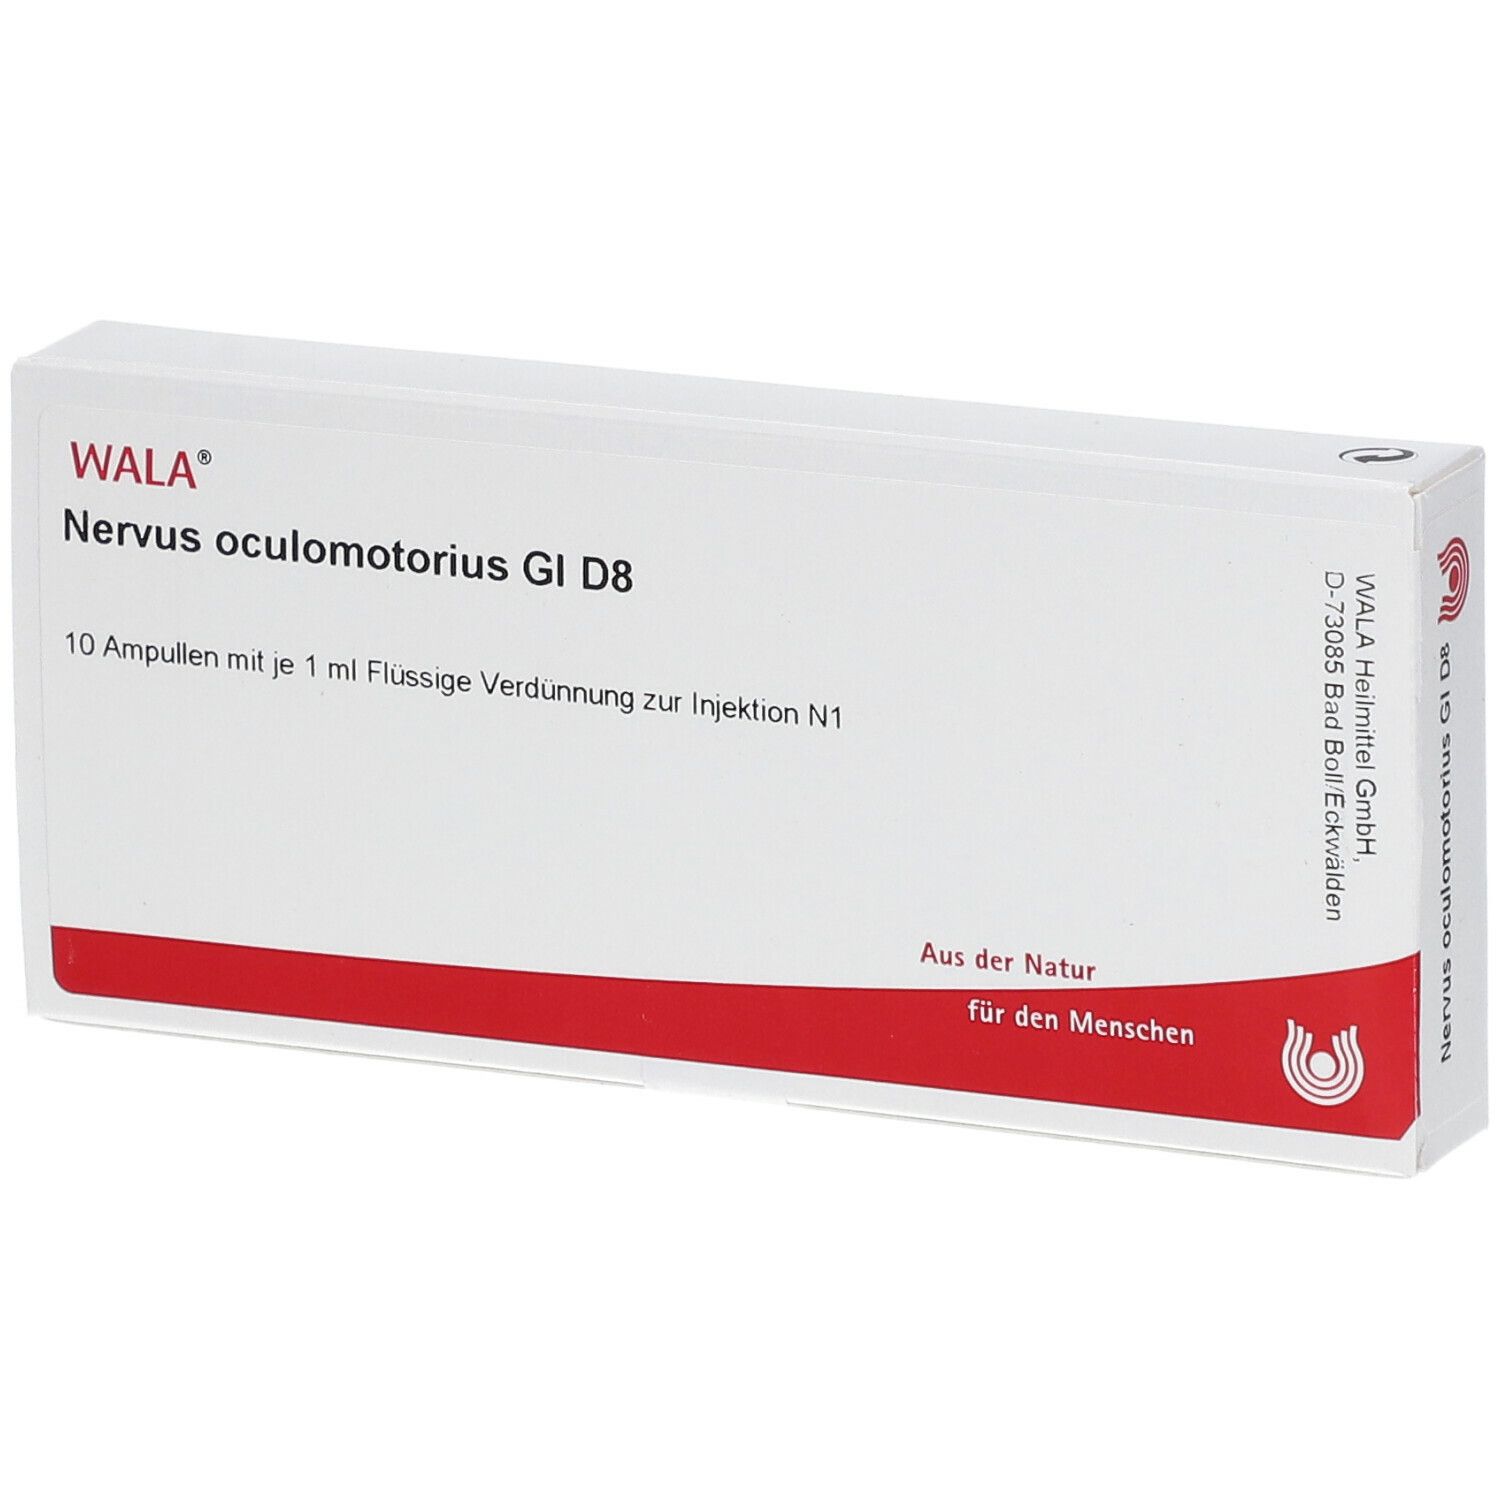 Wala® Nervus oculomotorius Gl D 8